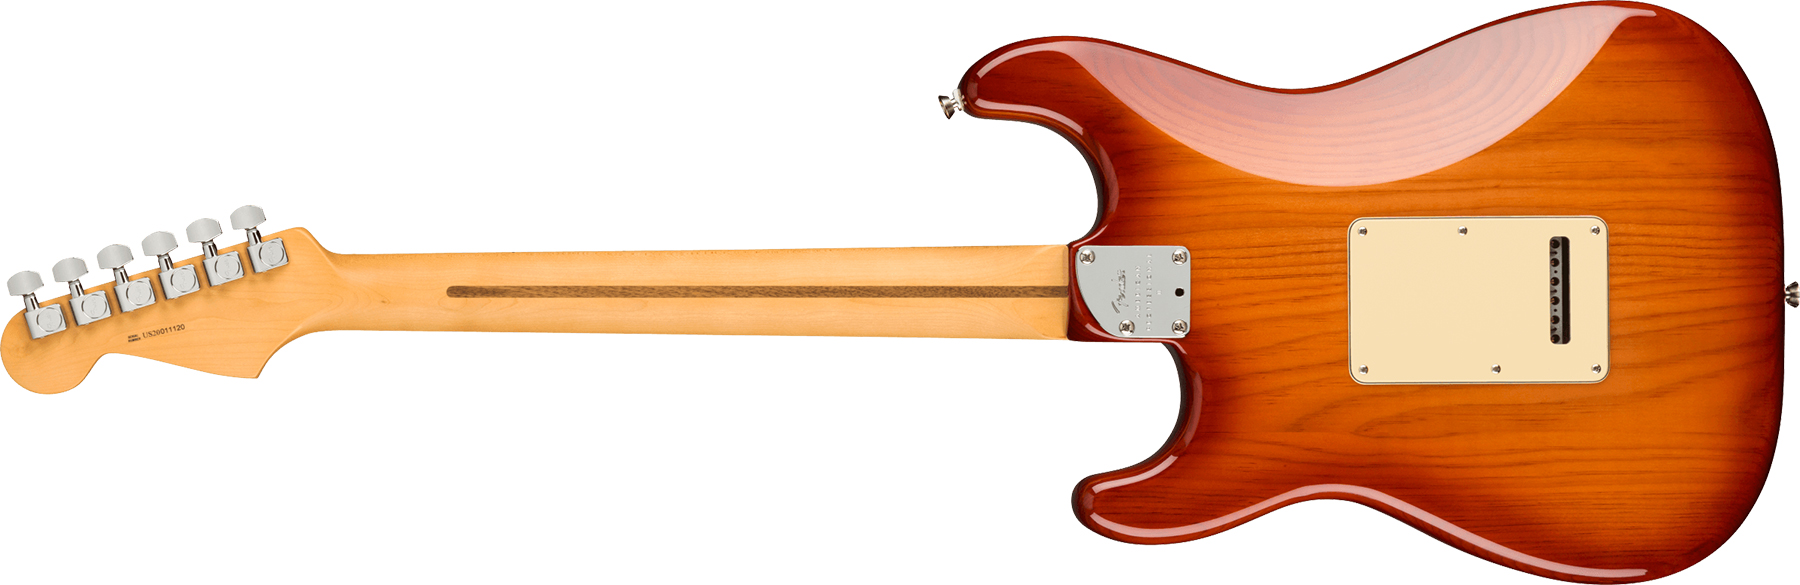 Fender Strat American Professional Ii Hss Usa Mn - Sienna Sunburst - Guitare Électrique Forme Str - Variation 1